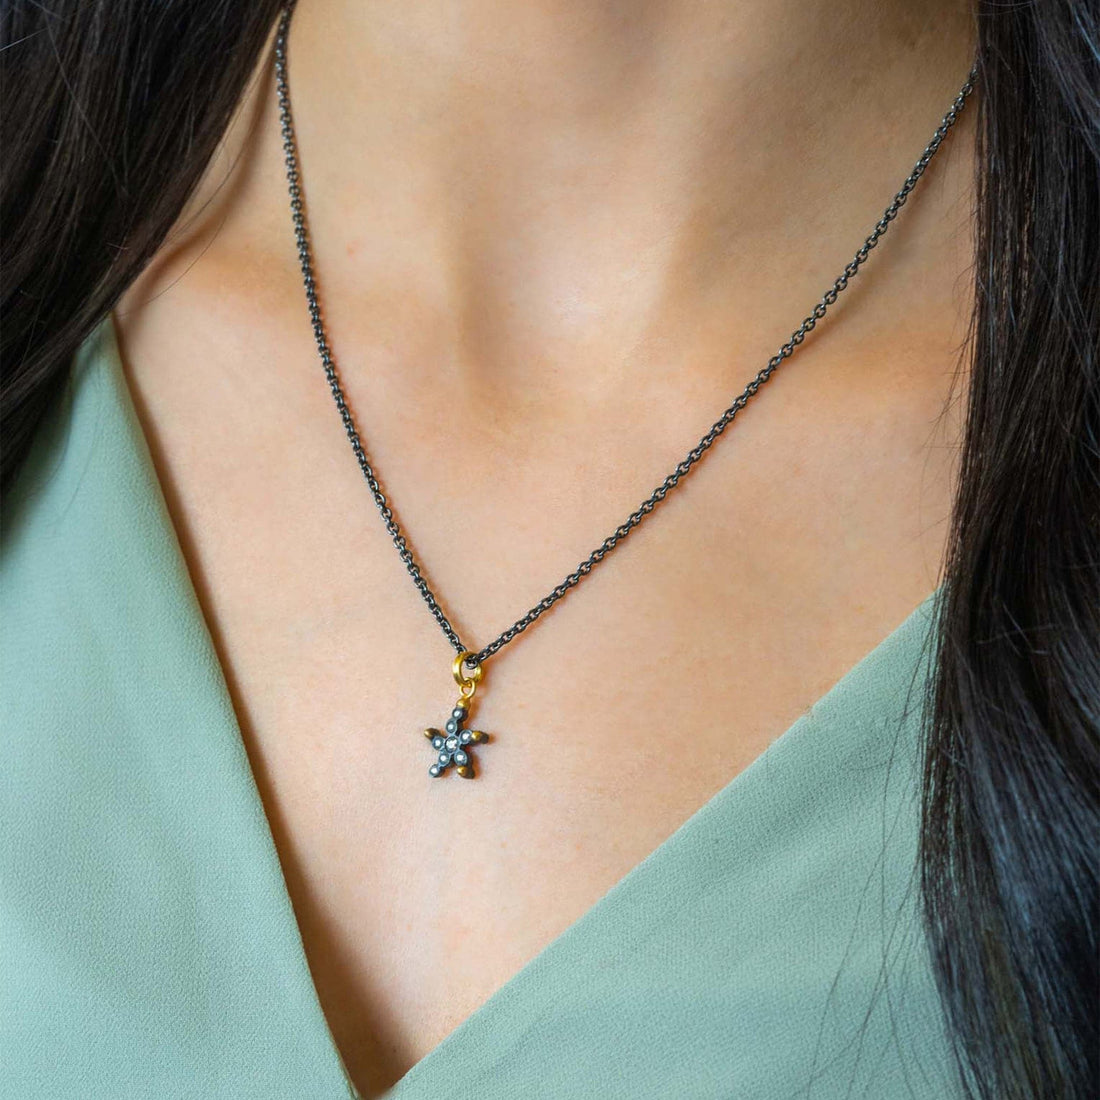 Oxidized Silver Diamond Star Pendant Necklace by Lika Behar Modeled